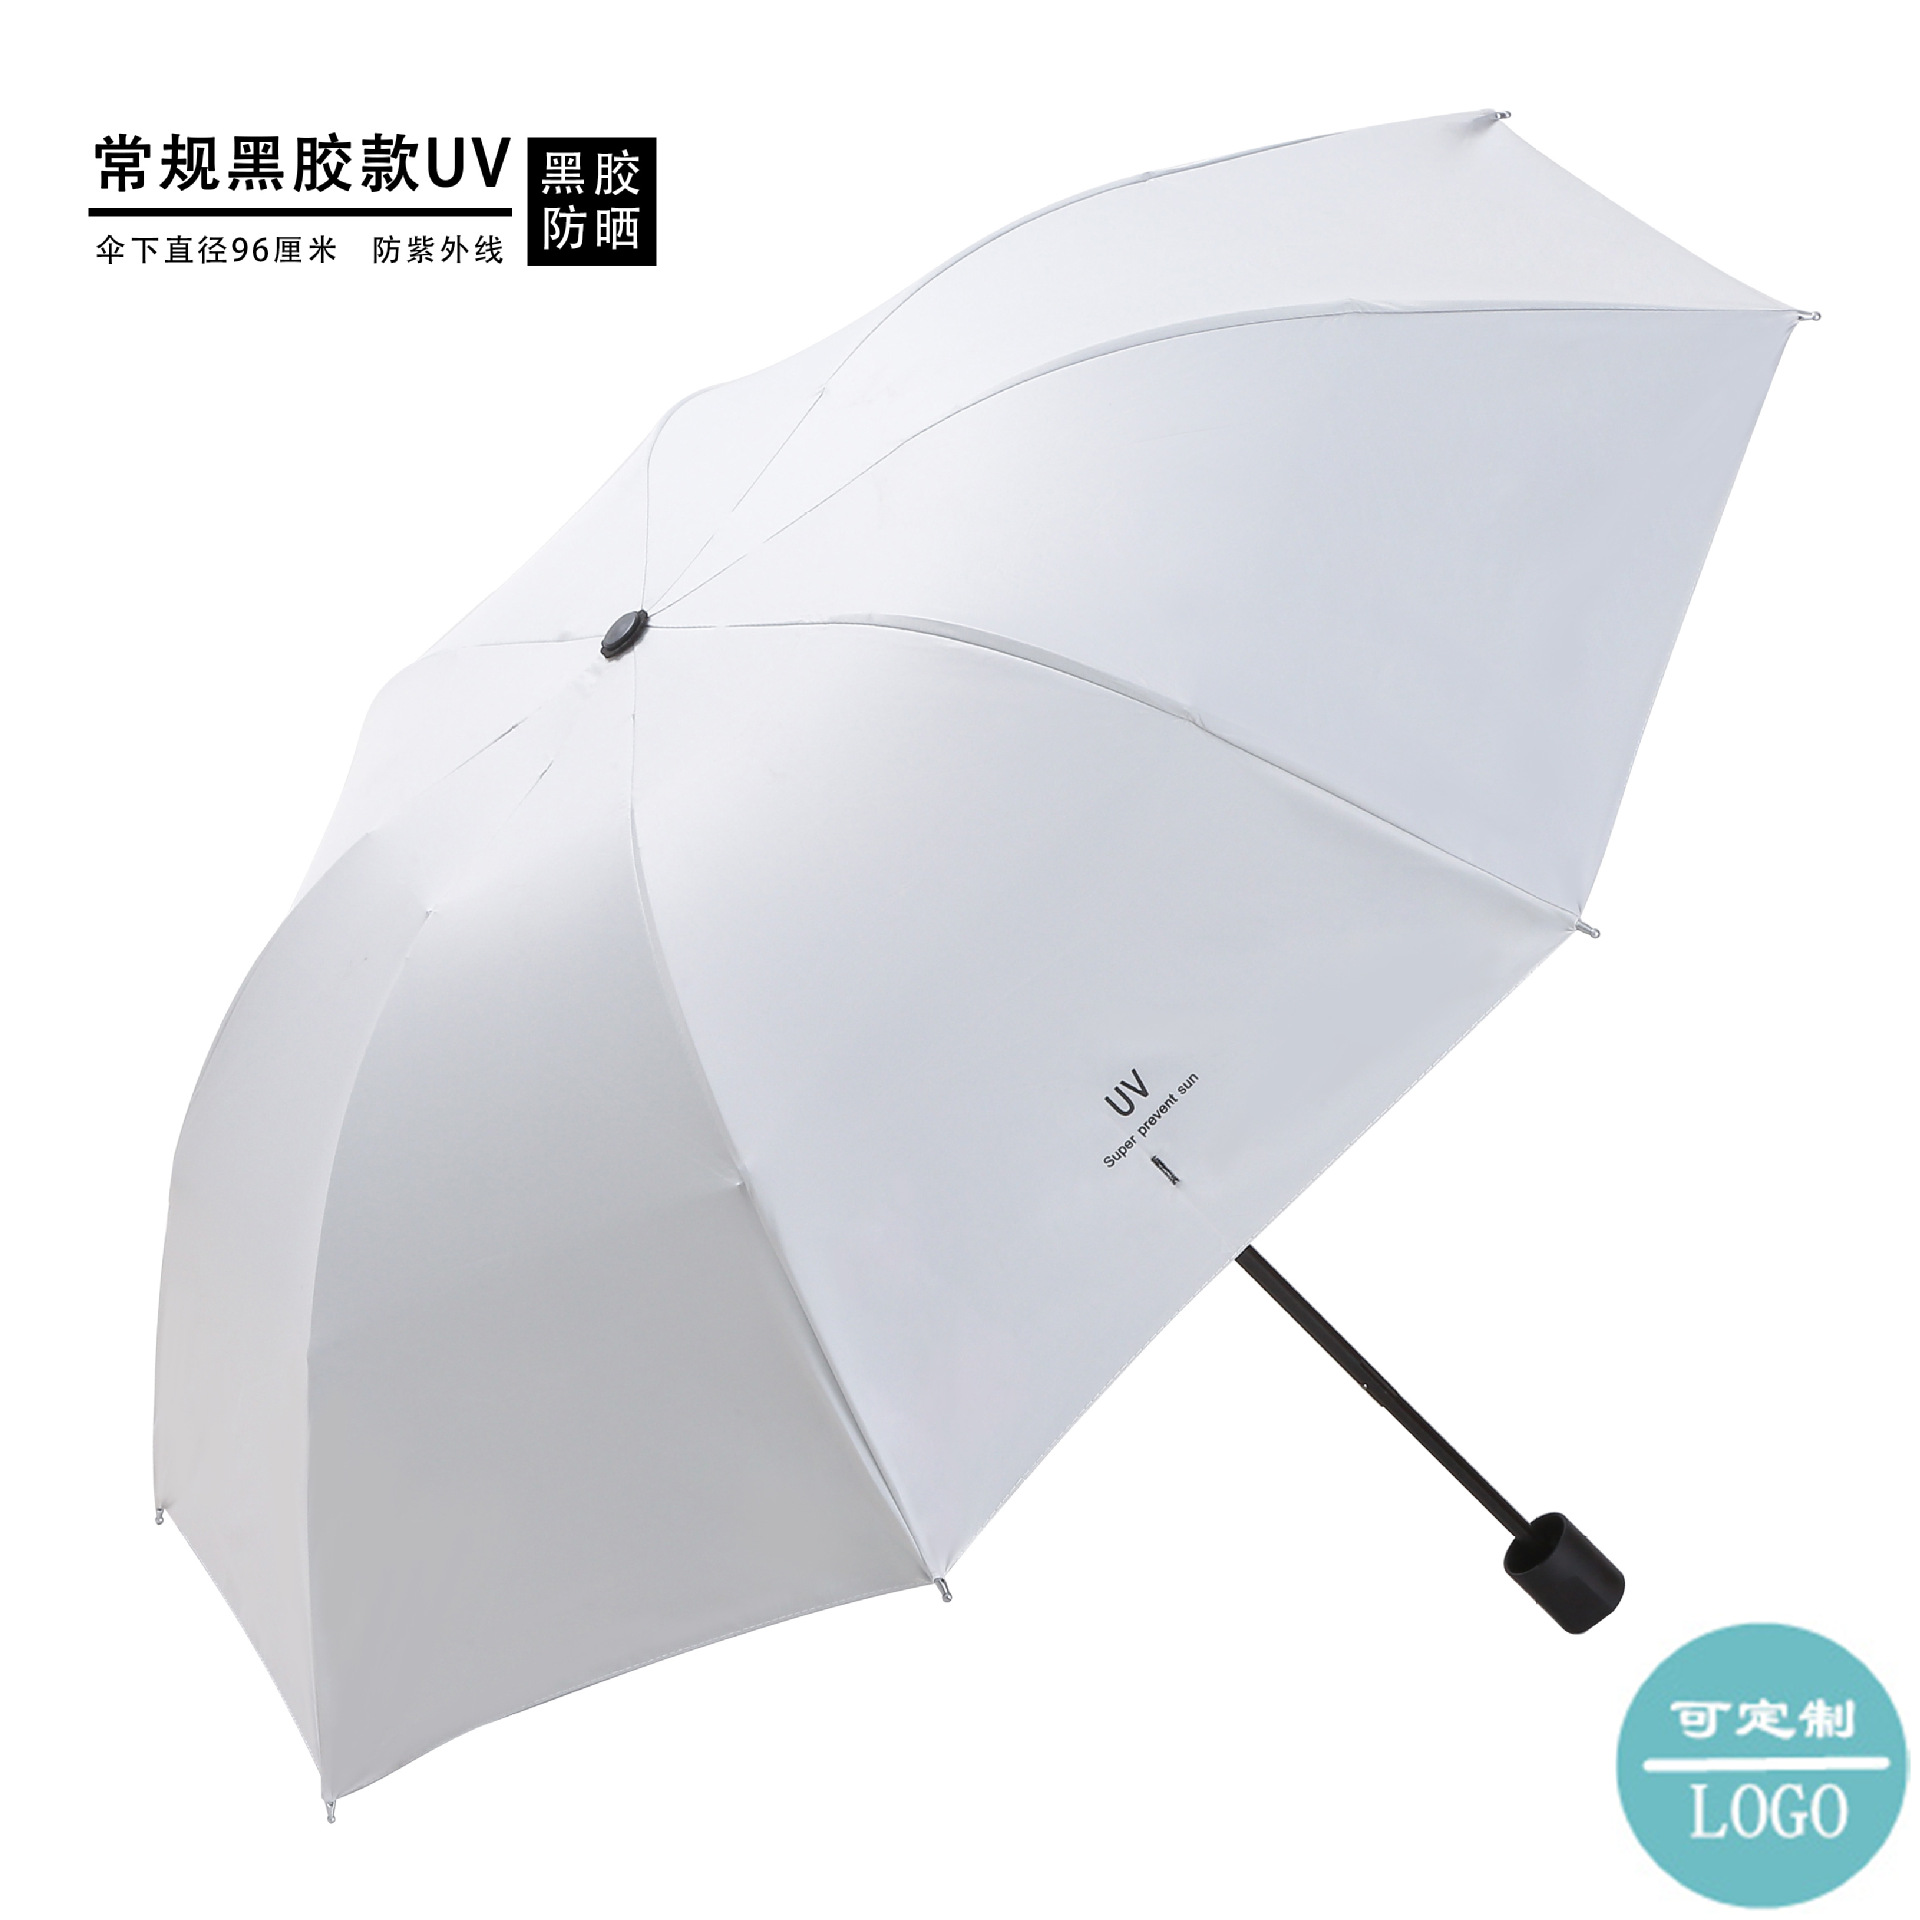 UV Vinyl Sun Umbrella Sun Umbrella UV Protection Sun Protection Umbrella Female 3-Fold Umbrella Custom Advertising Umbrella Logo